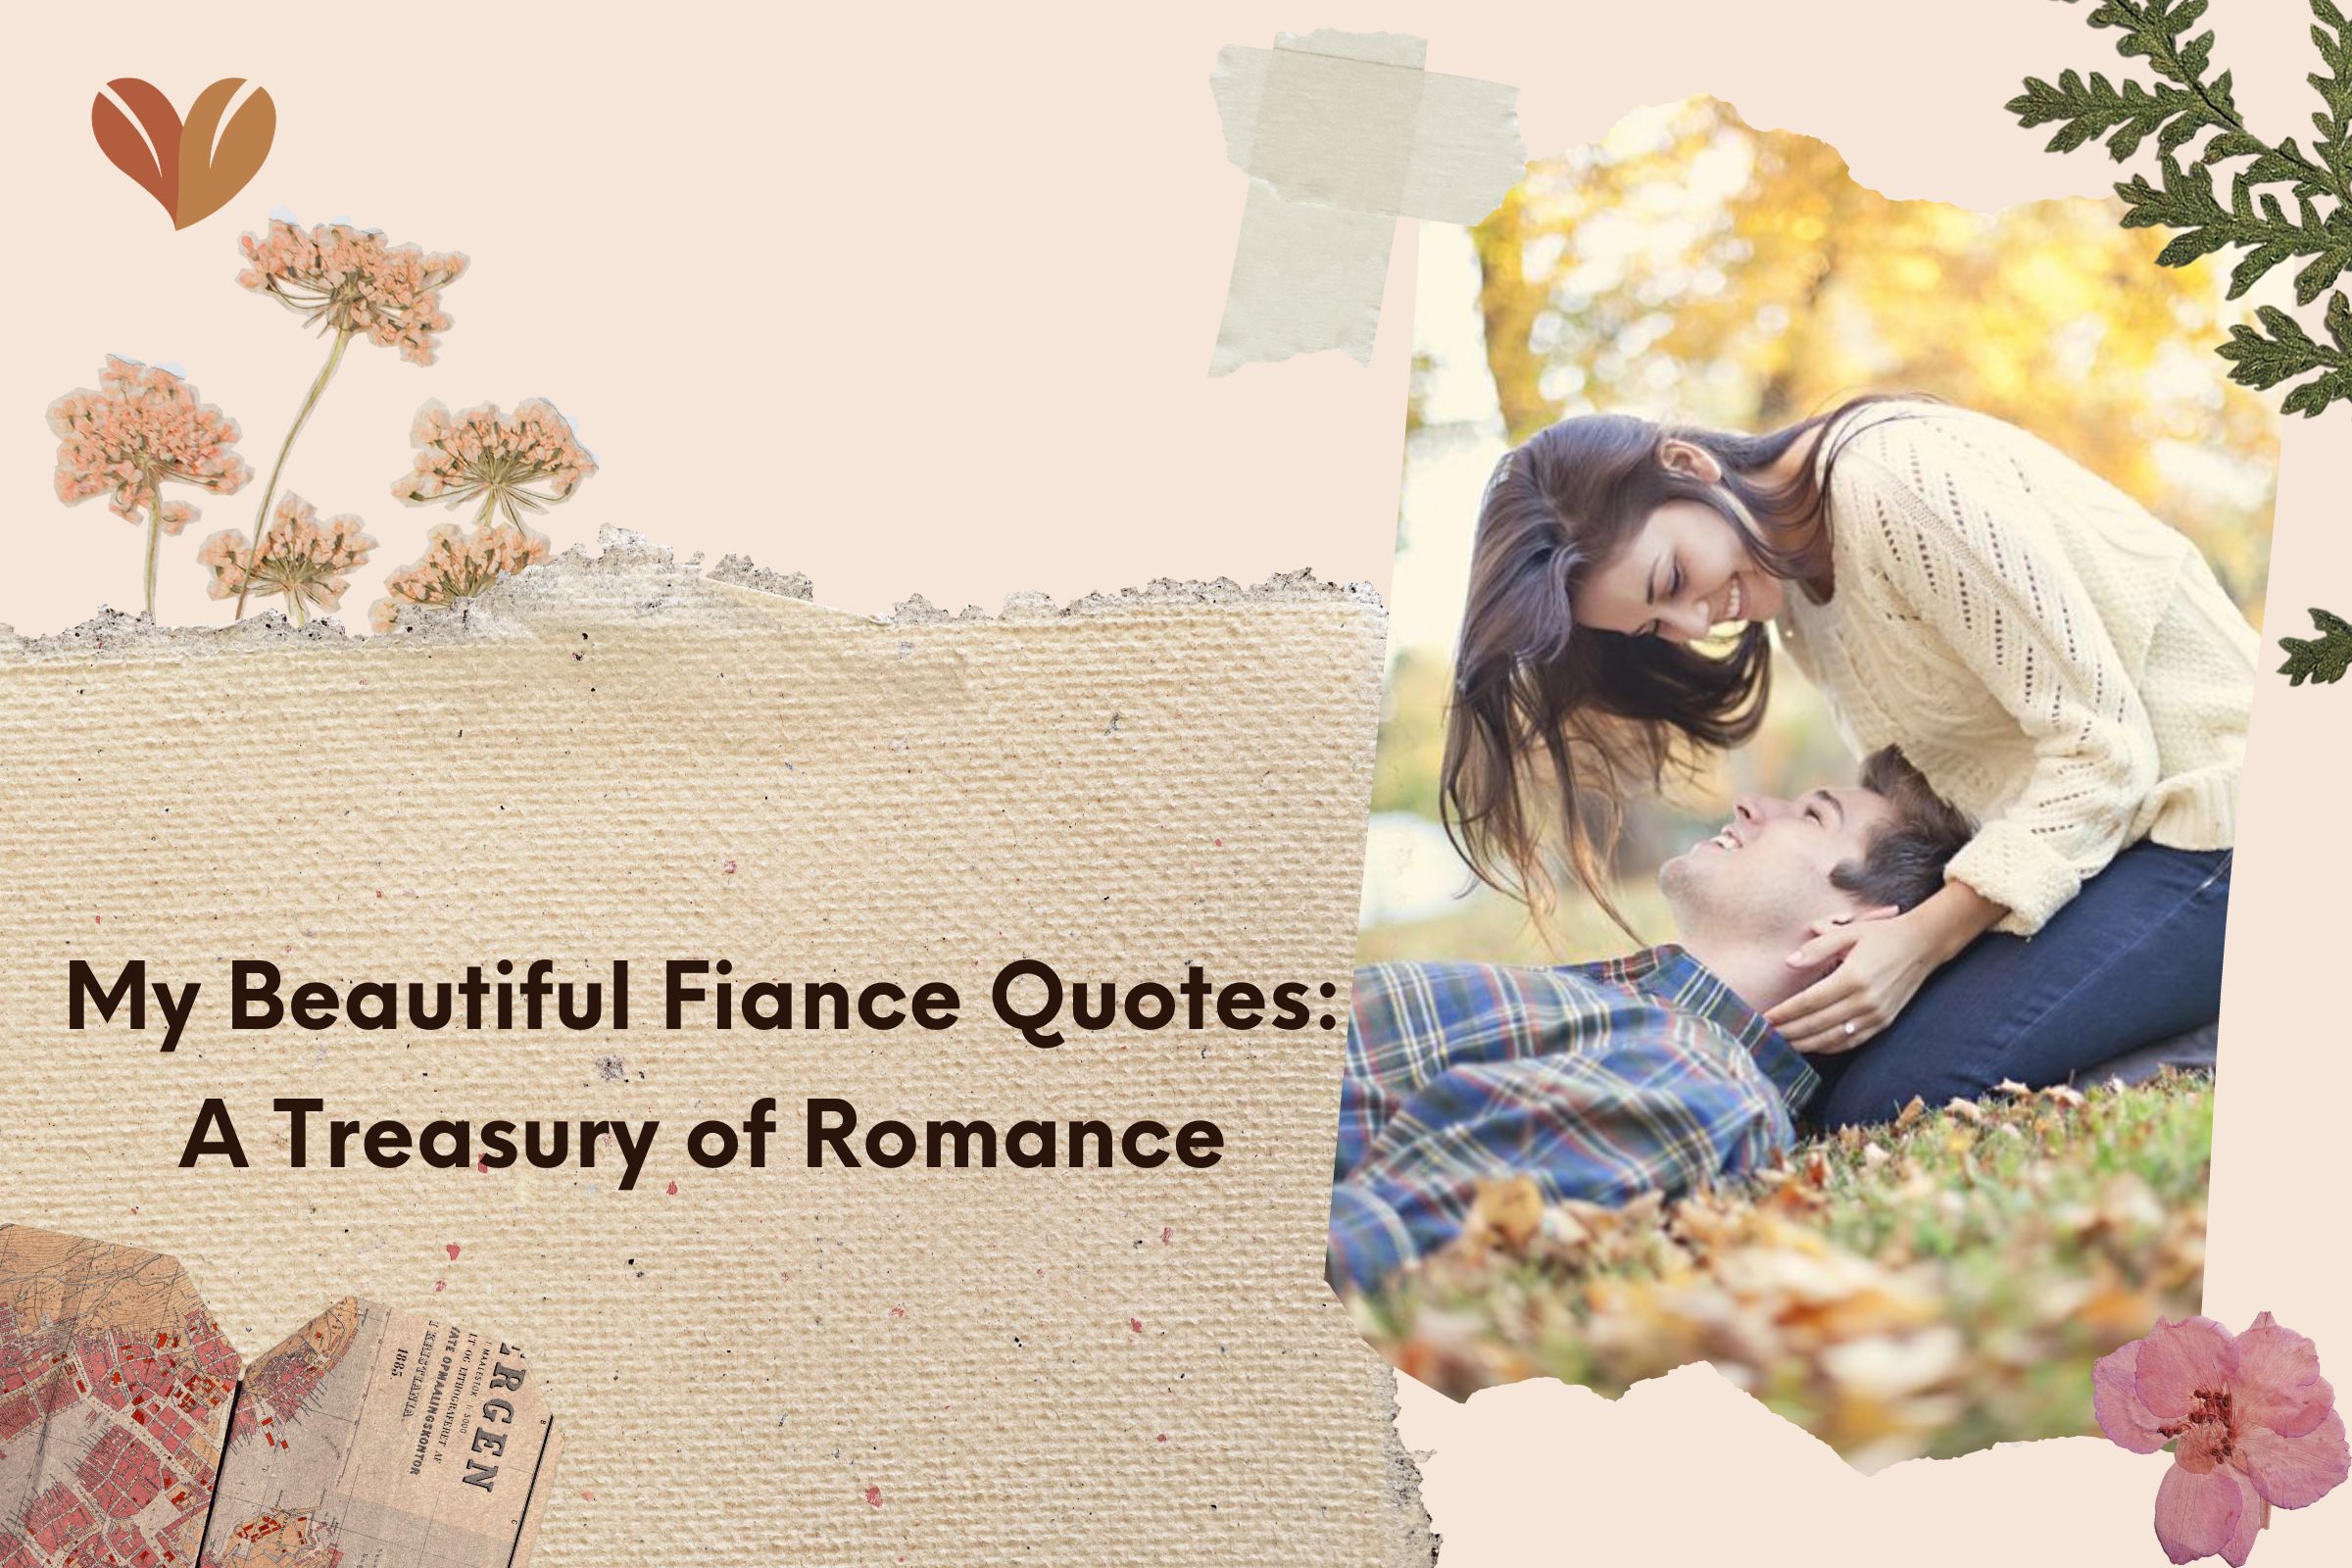 My Beautiful Fiance Quotes: A Treasury of Romance